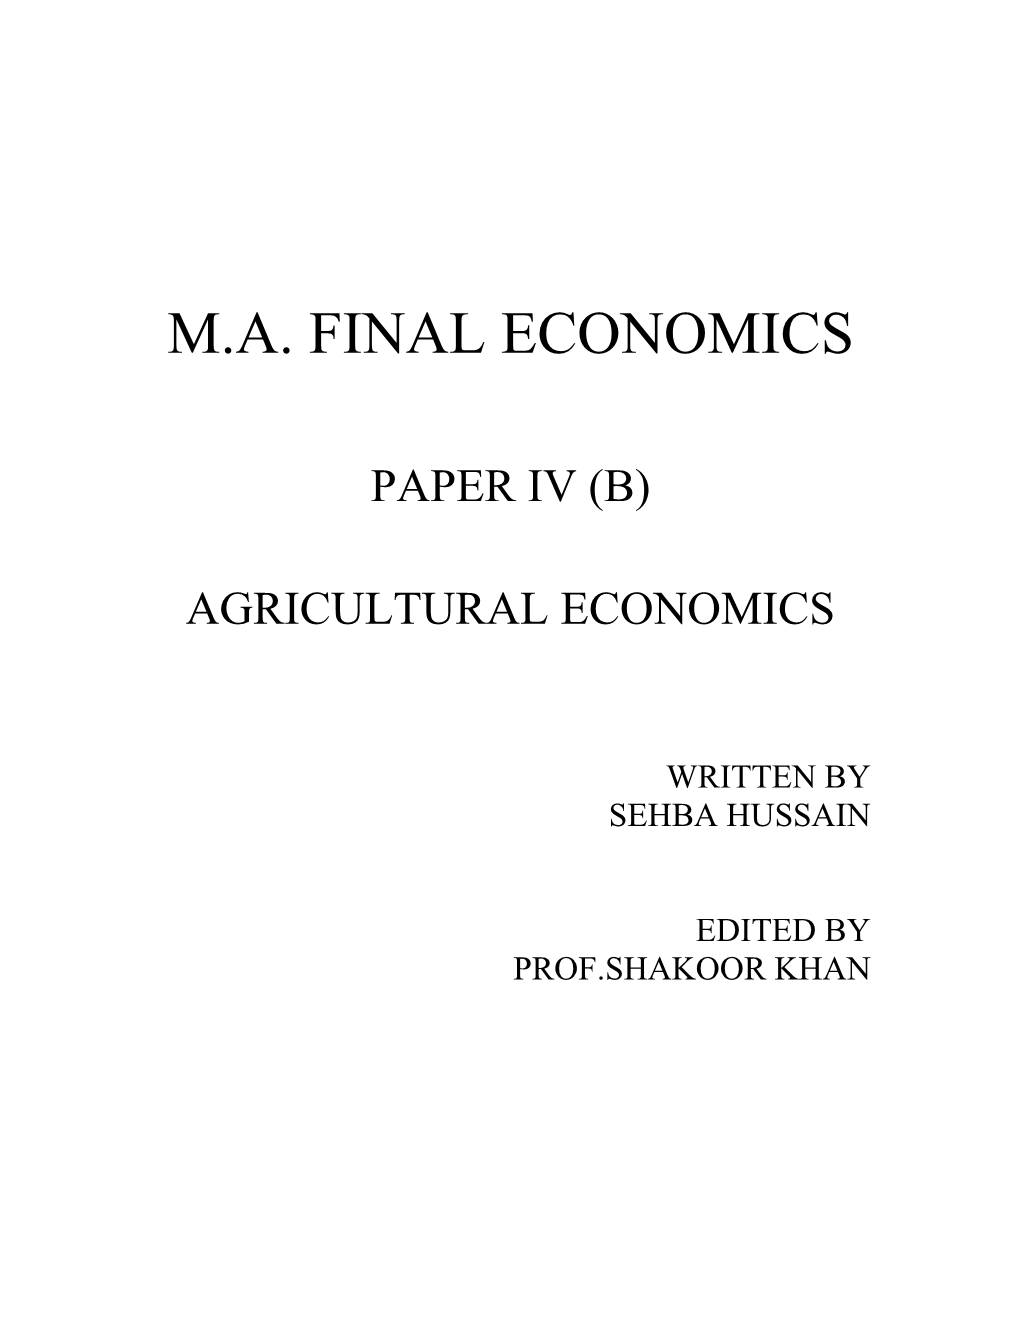 M.A. Final Economics